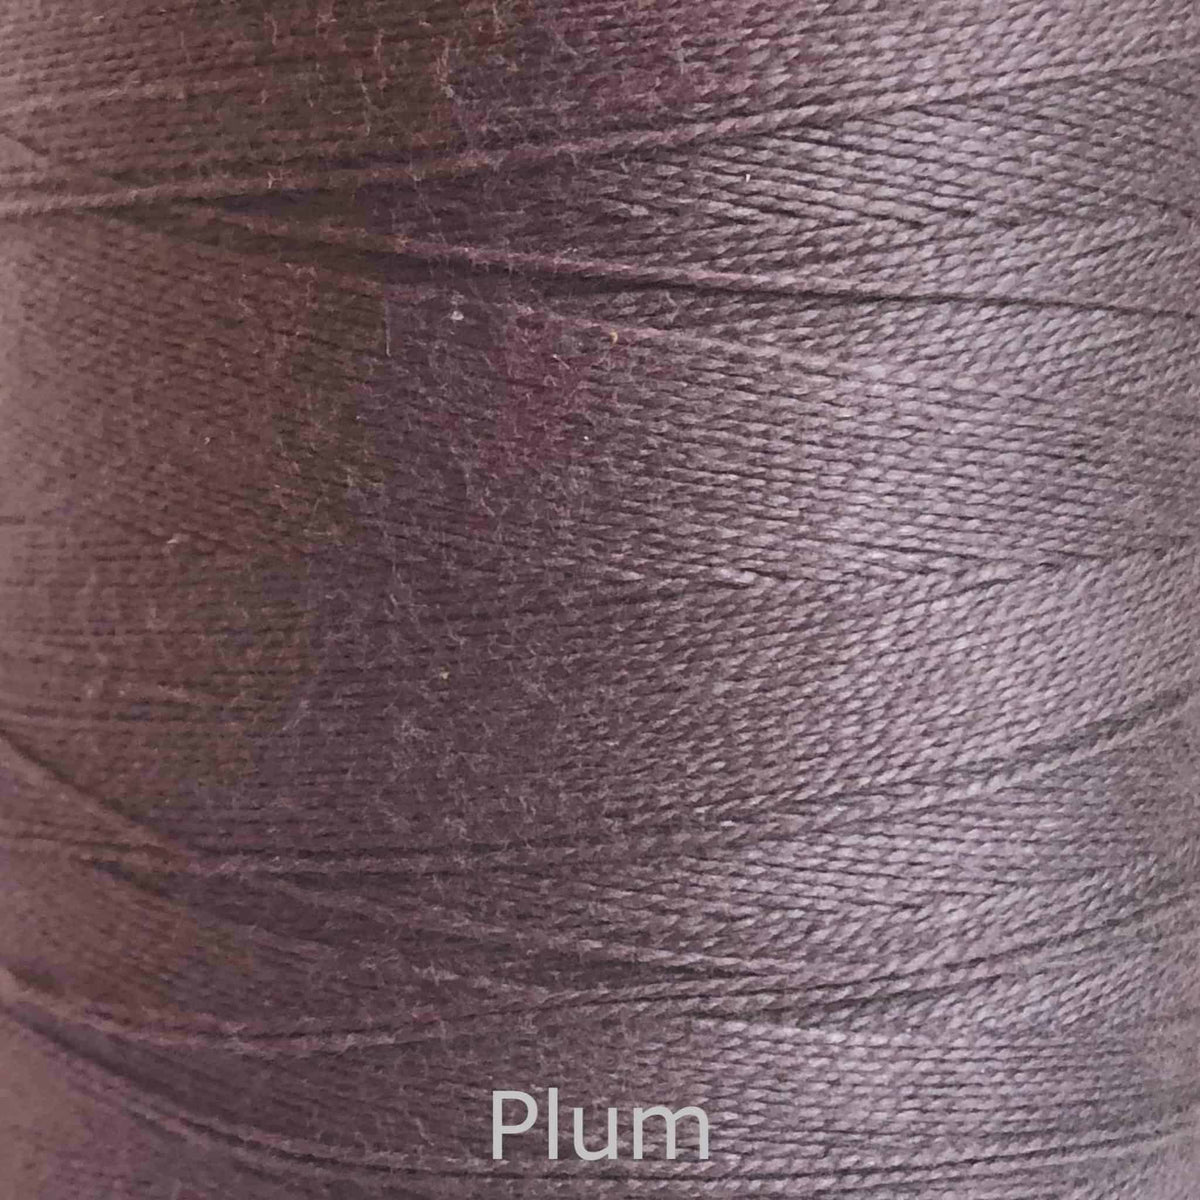 16/2 cotton weaving yarn plum